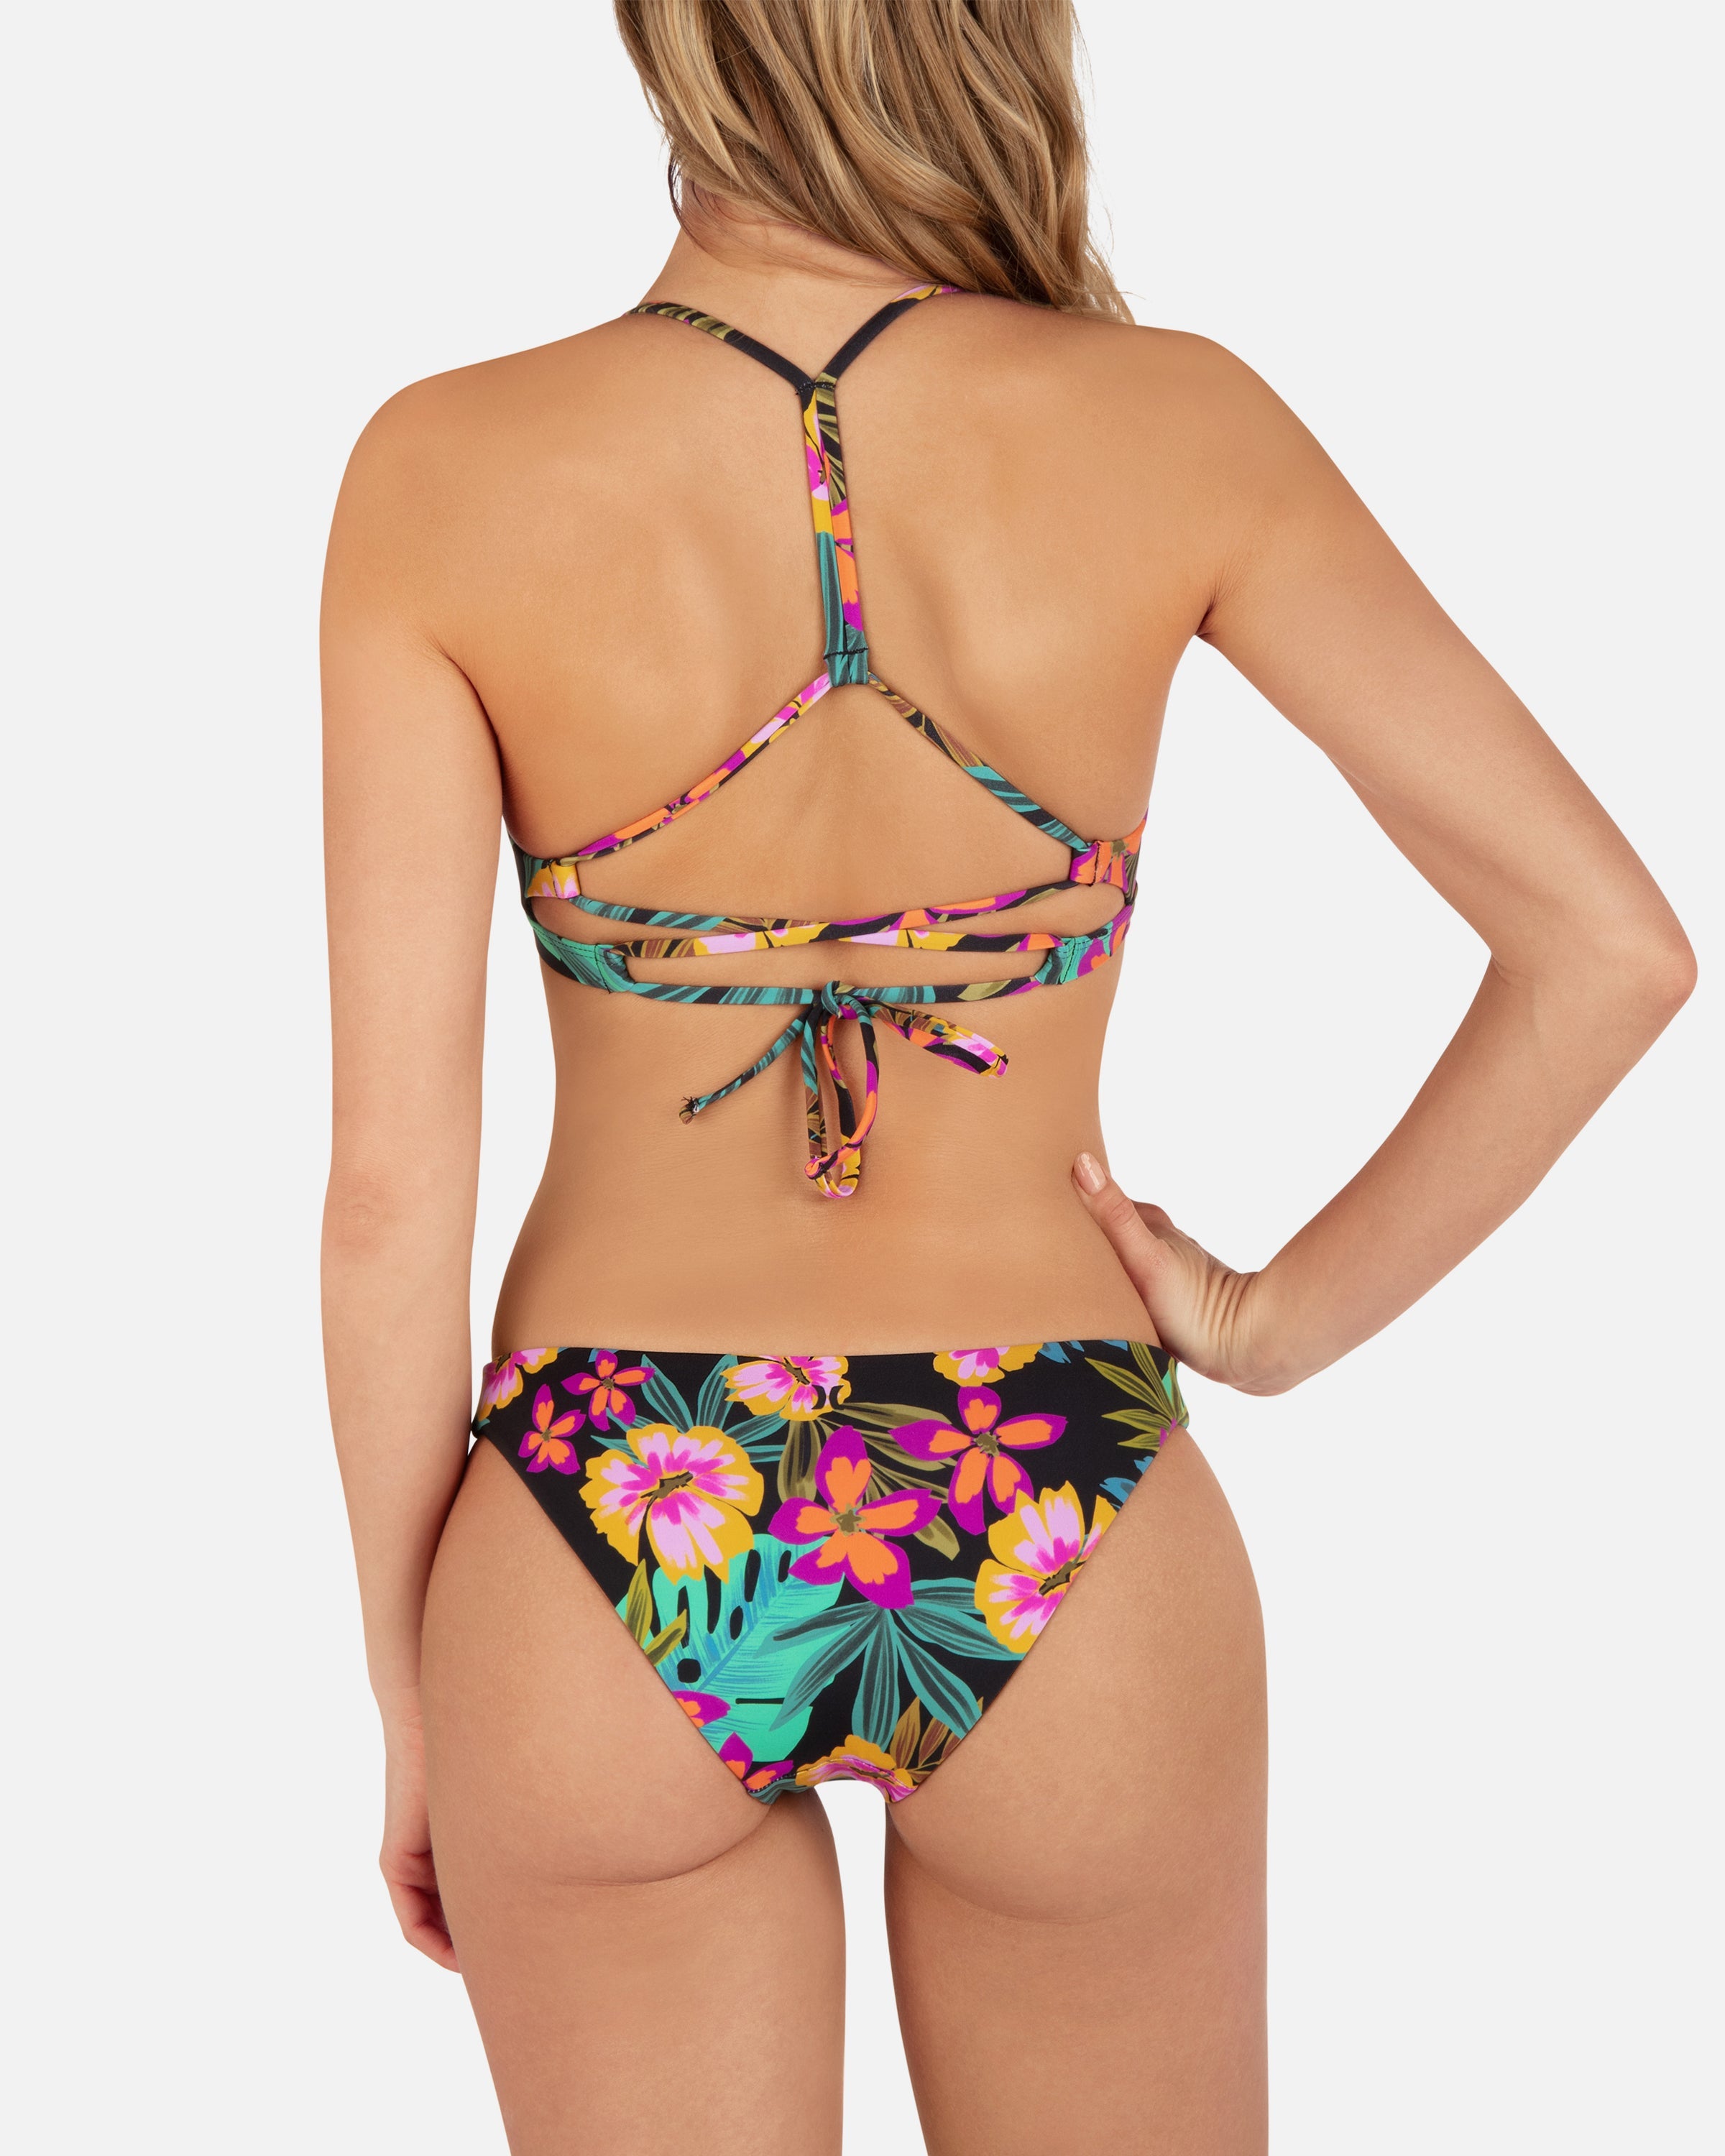 Floral Print - Fiji Fantasy Adjustable Bikini Top